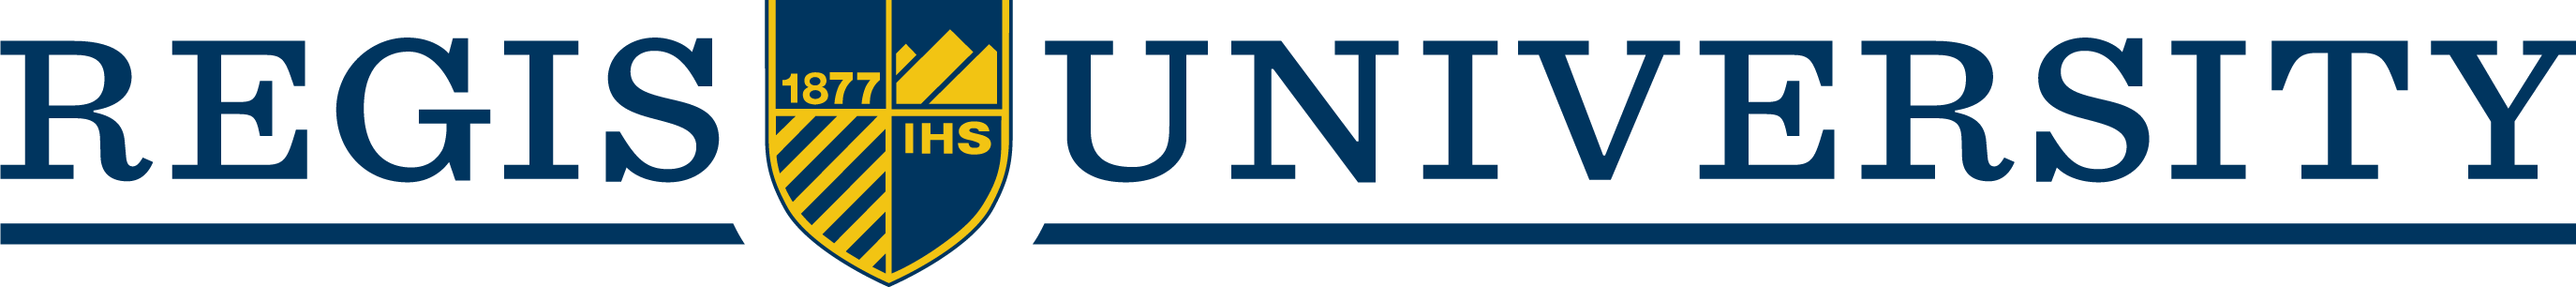 Regis University - College for Professional Services Logo photo - 1